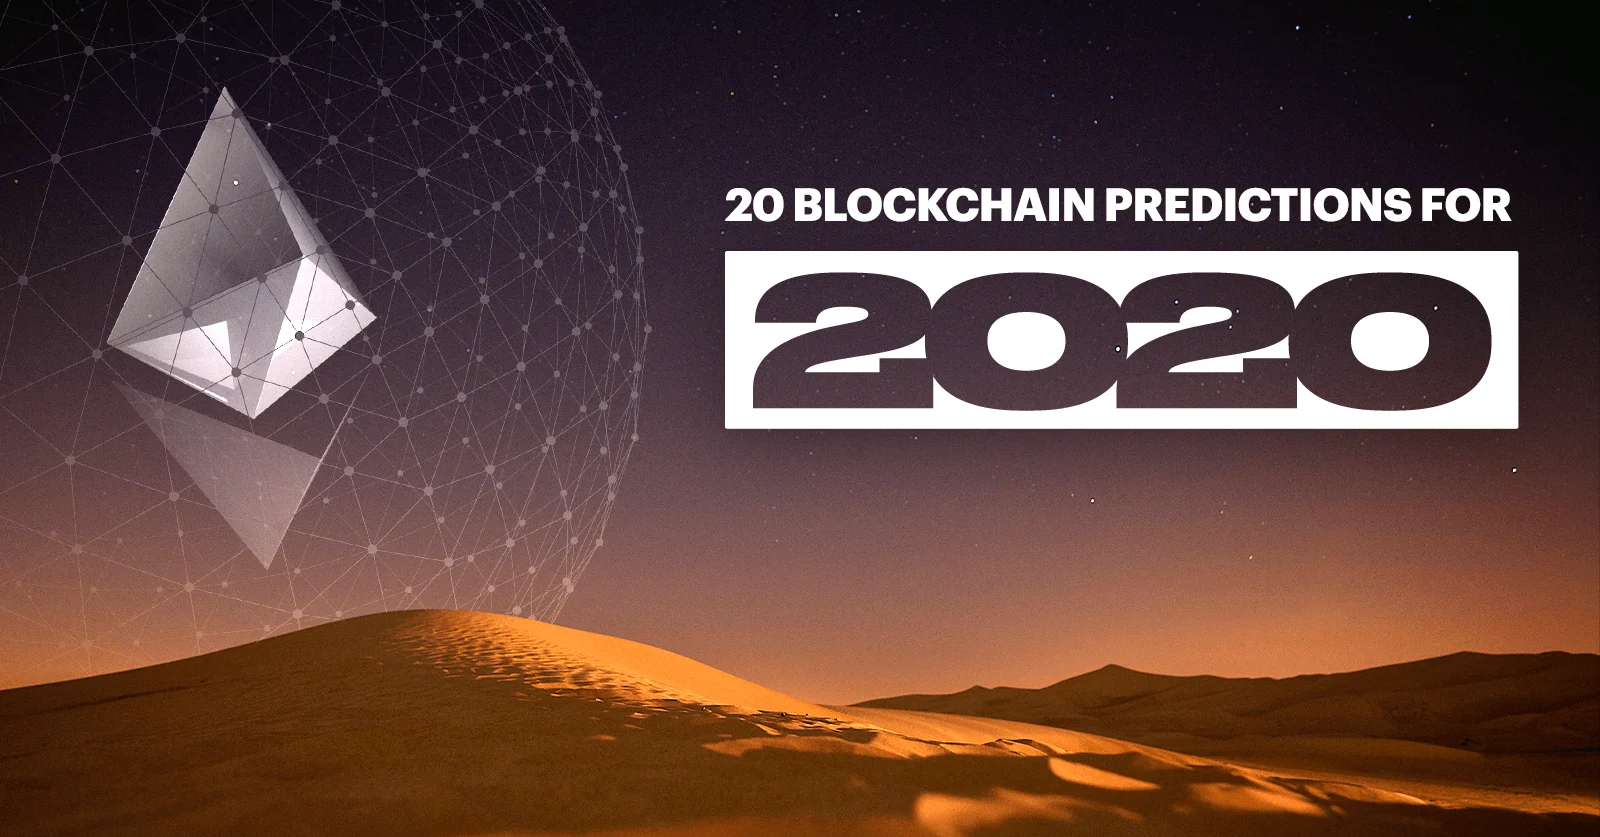 Image: Andrew Keys: 20 Blockchain Predictions for 2020